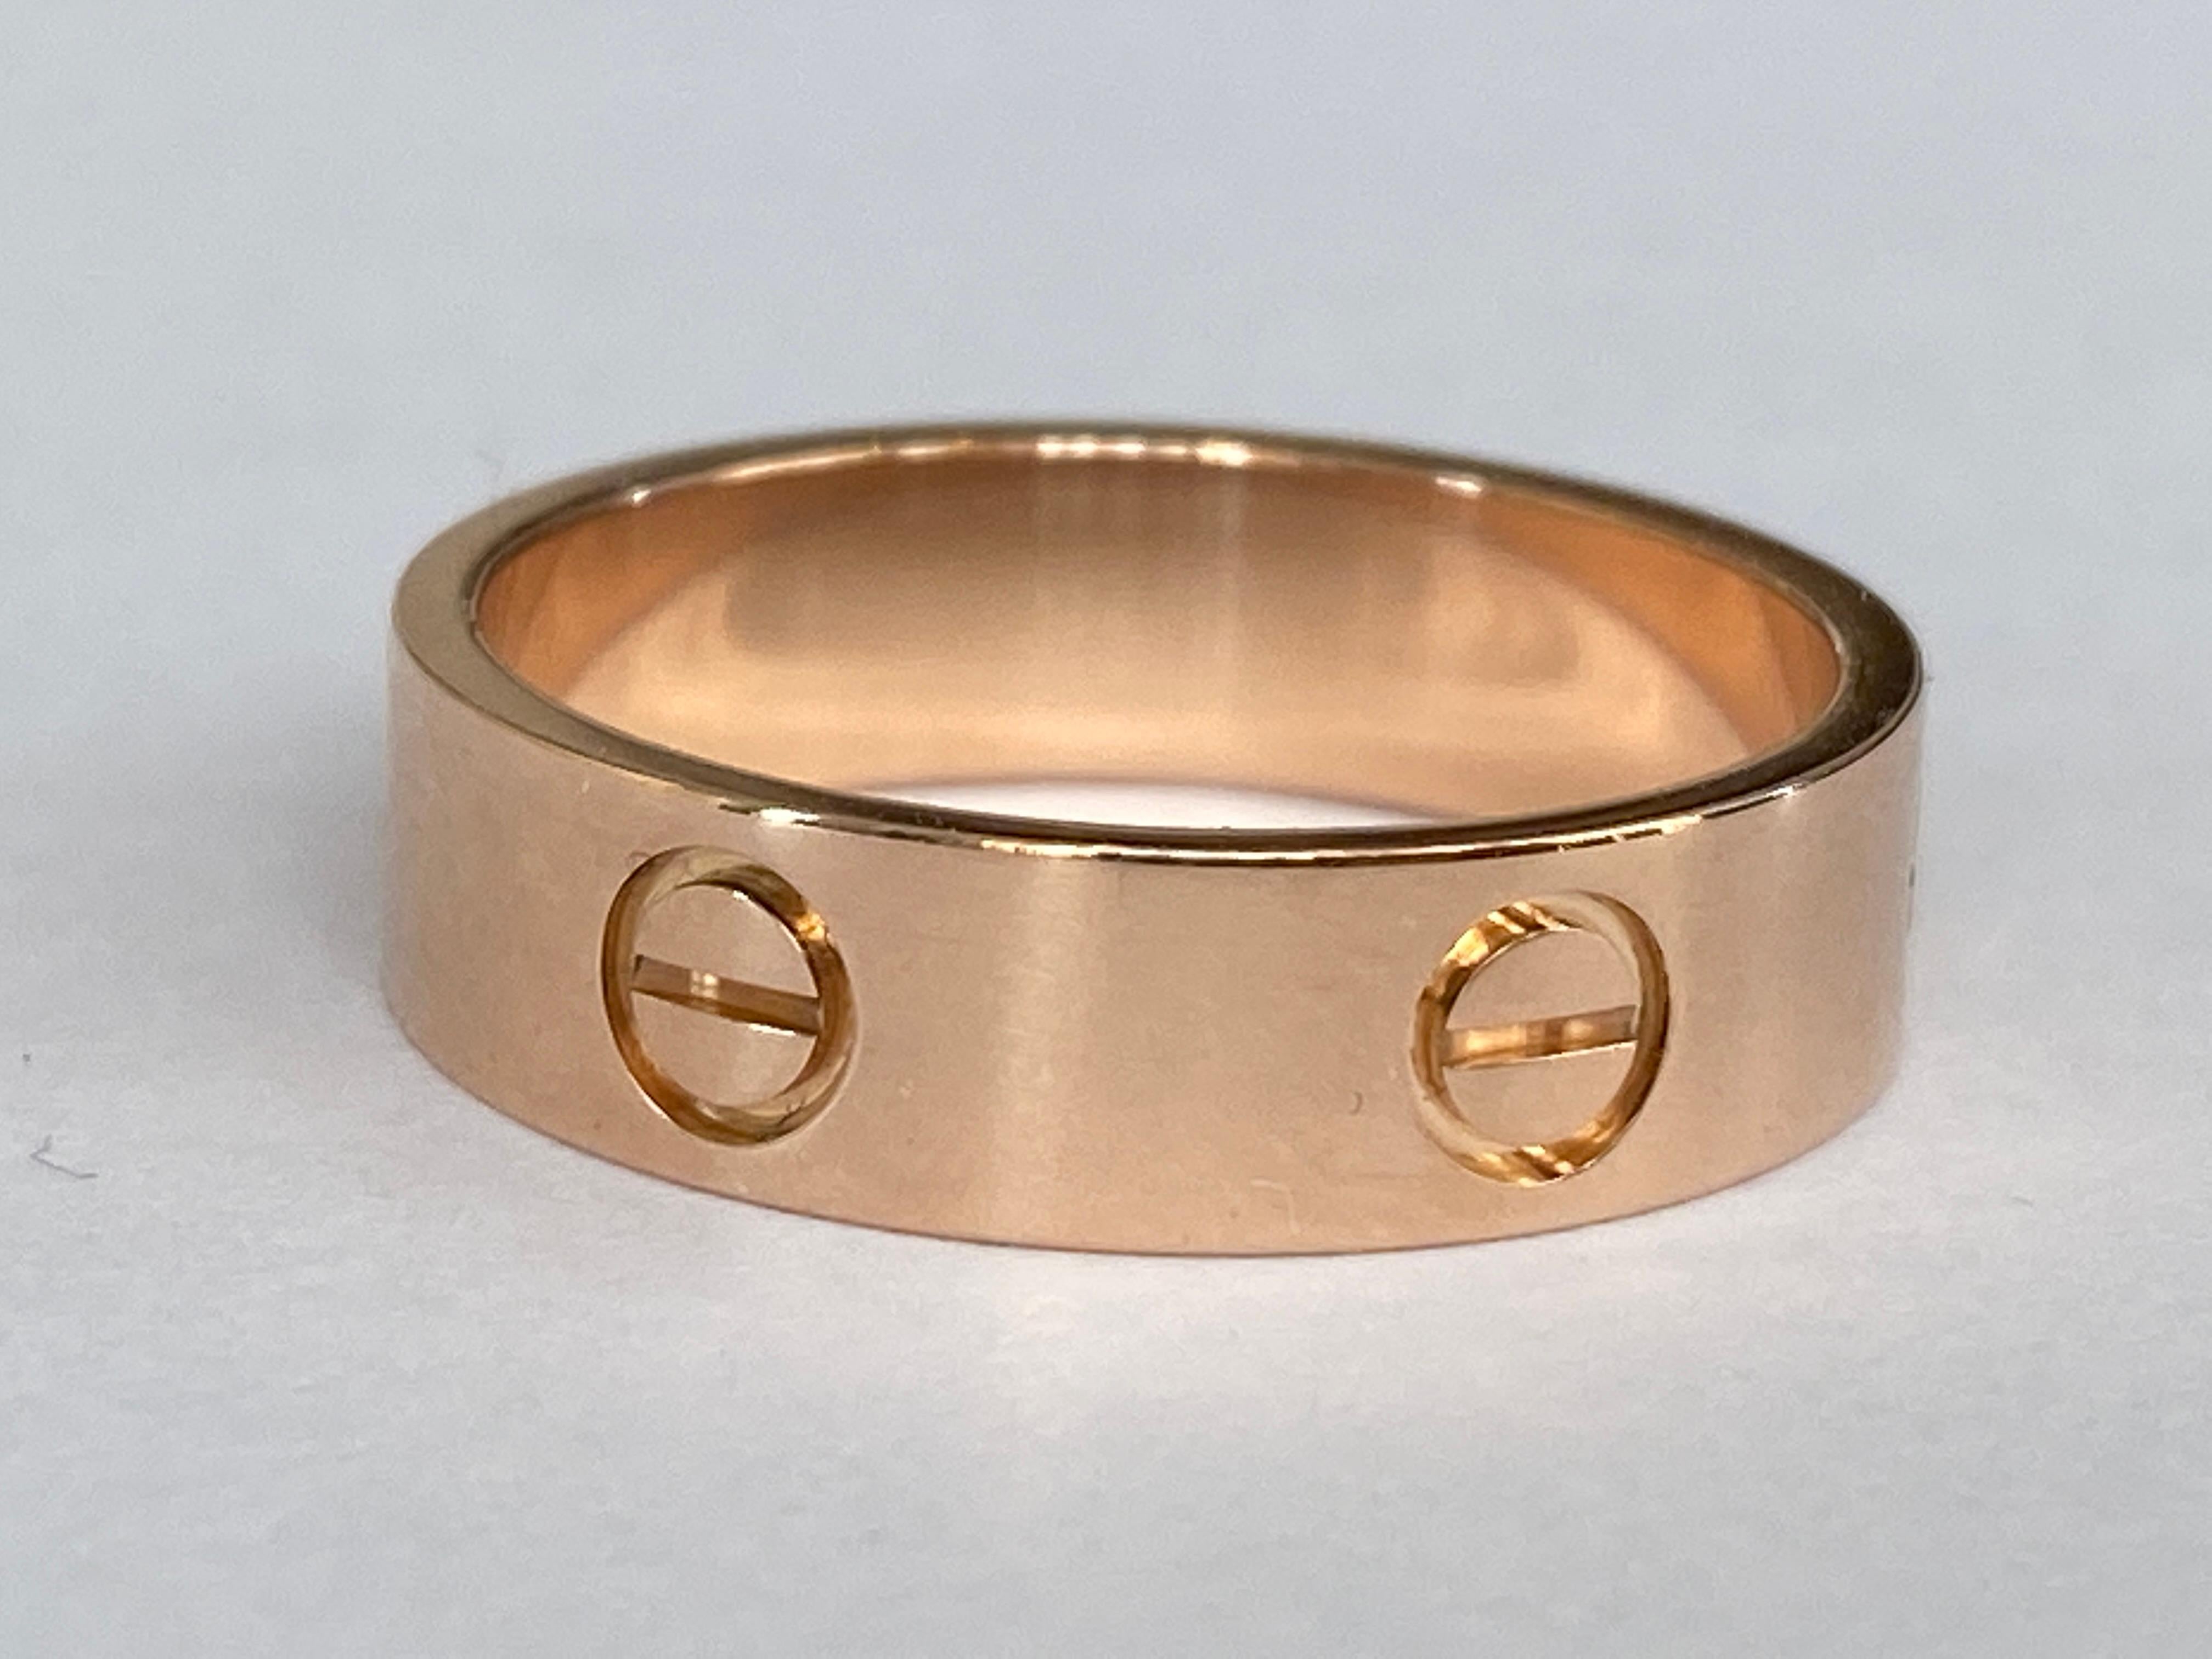  Cartier Love Ring Anneau de mariage taille 59 Or rose Unisexe 